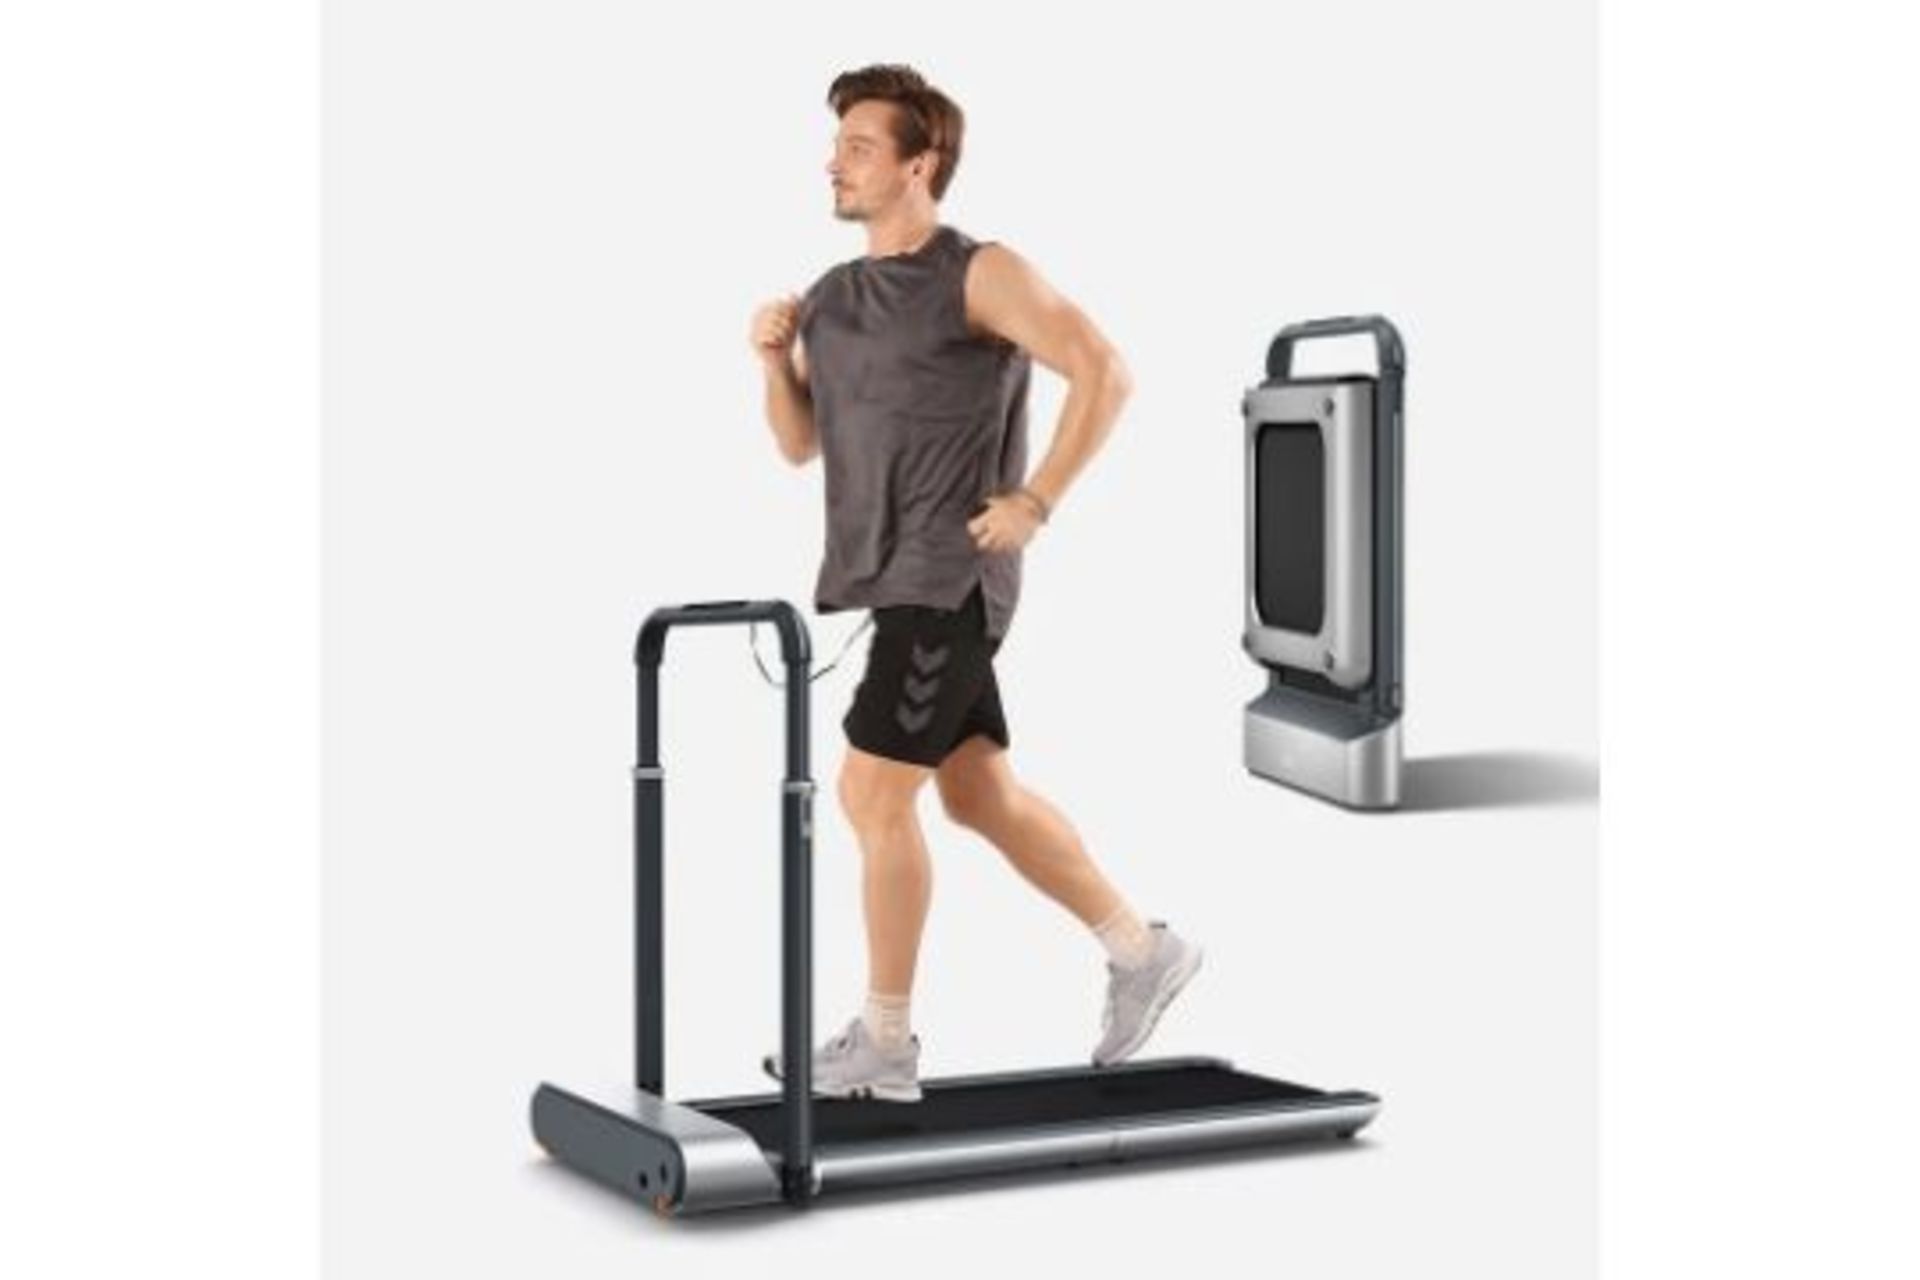 WalkingPad R1 Pro 2IN1 Folding Treadmill 6.2MPH. RRP £699. 2 IN 1 FOLDABLE TREADMILL For Walking